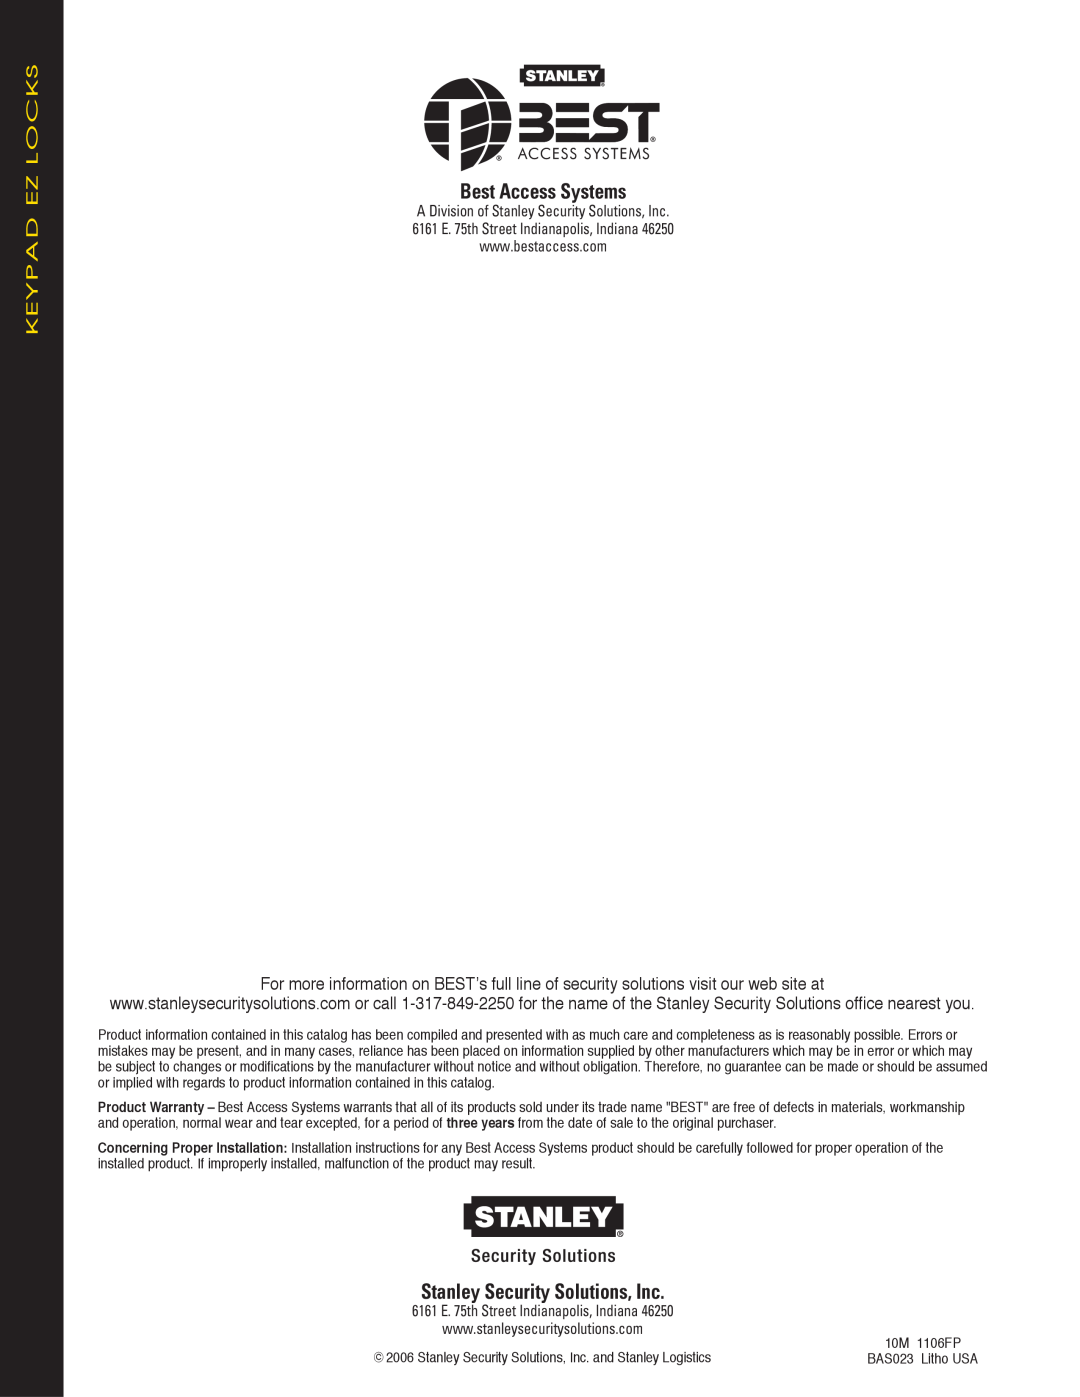 Stanley Black & Decker KEYPAD EZ LOCKS manual Keypad Ez Locks, Best Access Systems, Stanley Security Solutions, Inc 